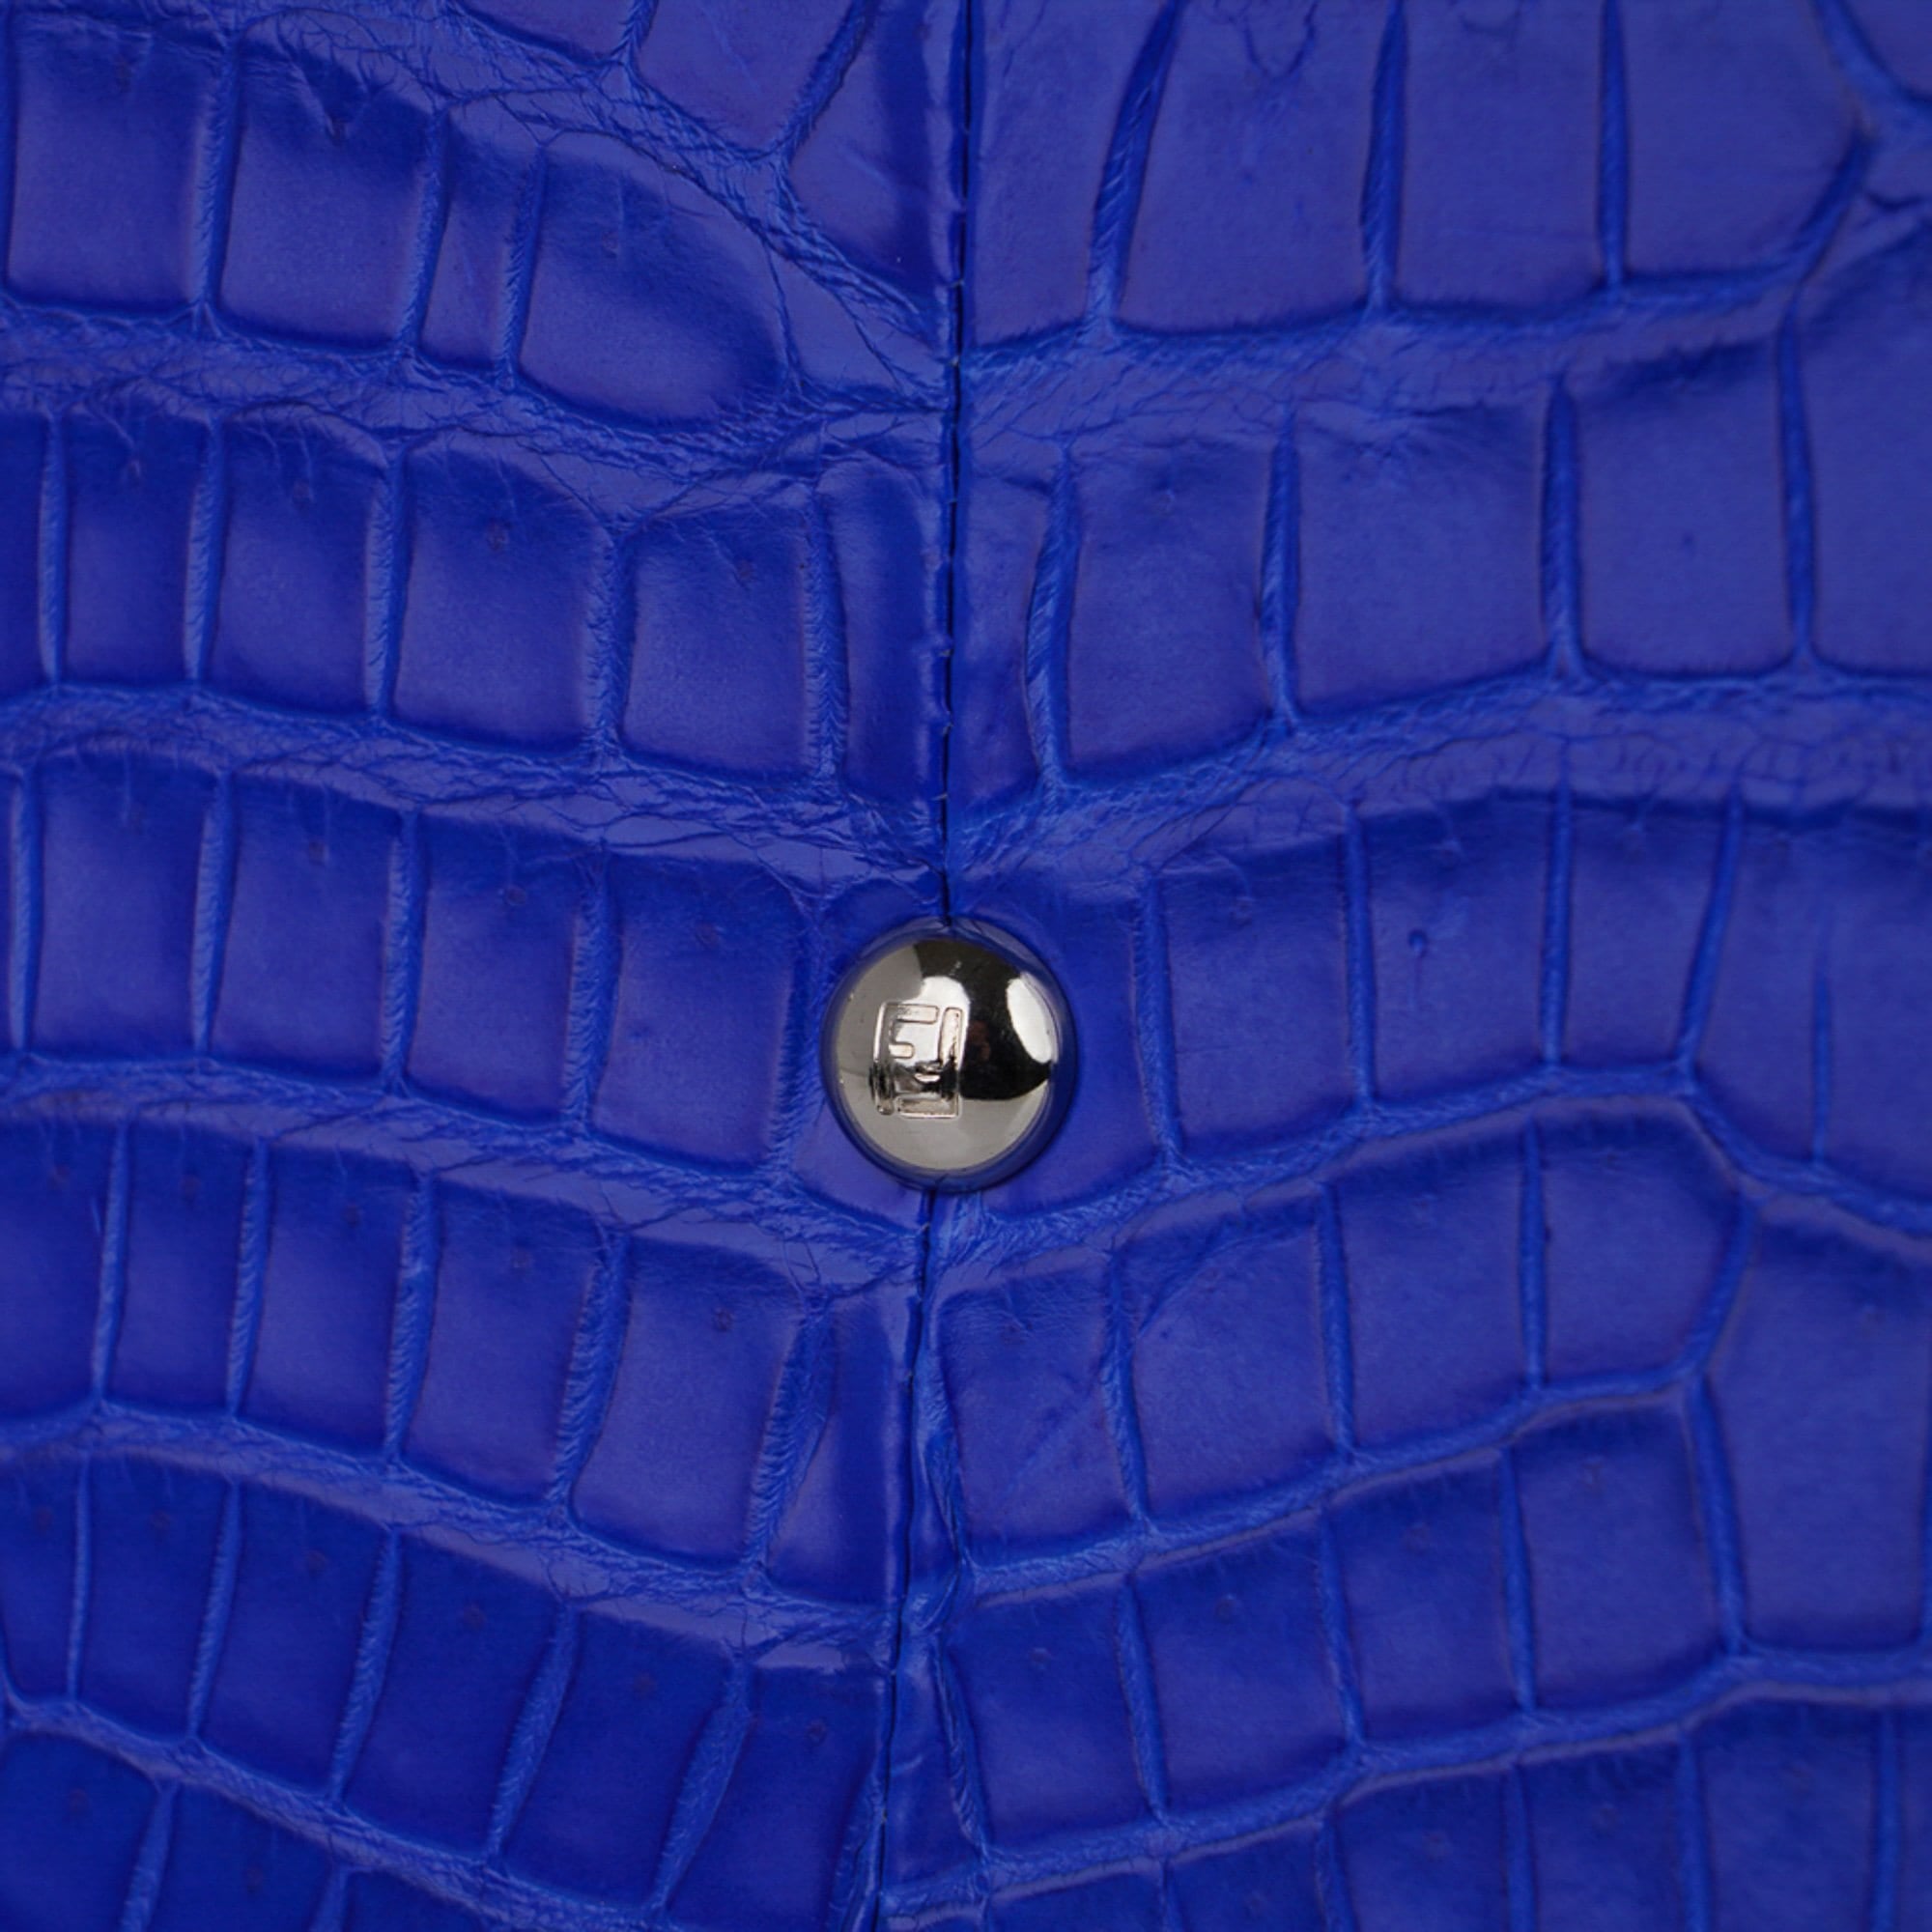 Fendi Bag 3Jours Matte Blue Crocodile Tote Medium New w/Box